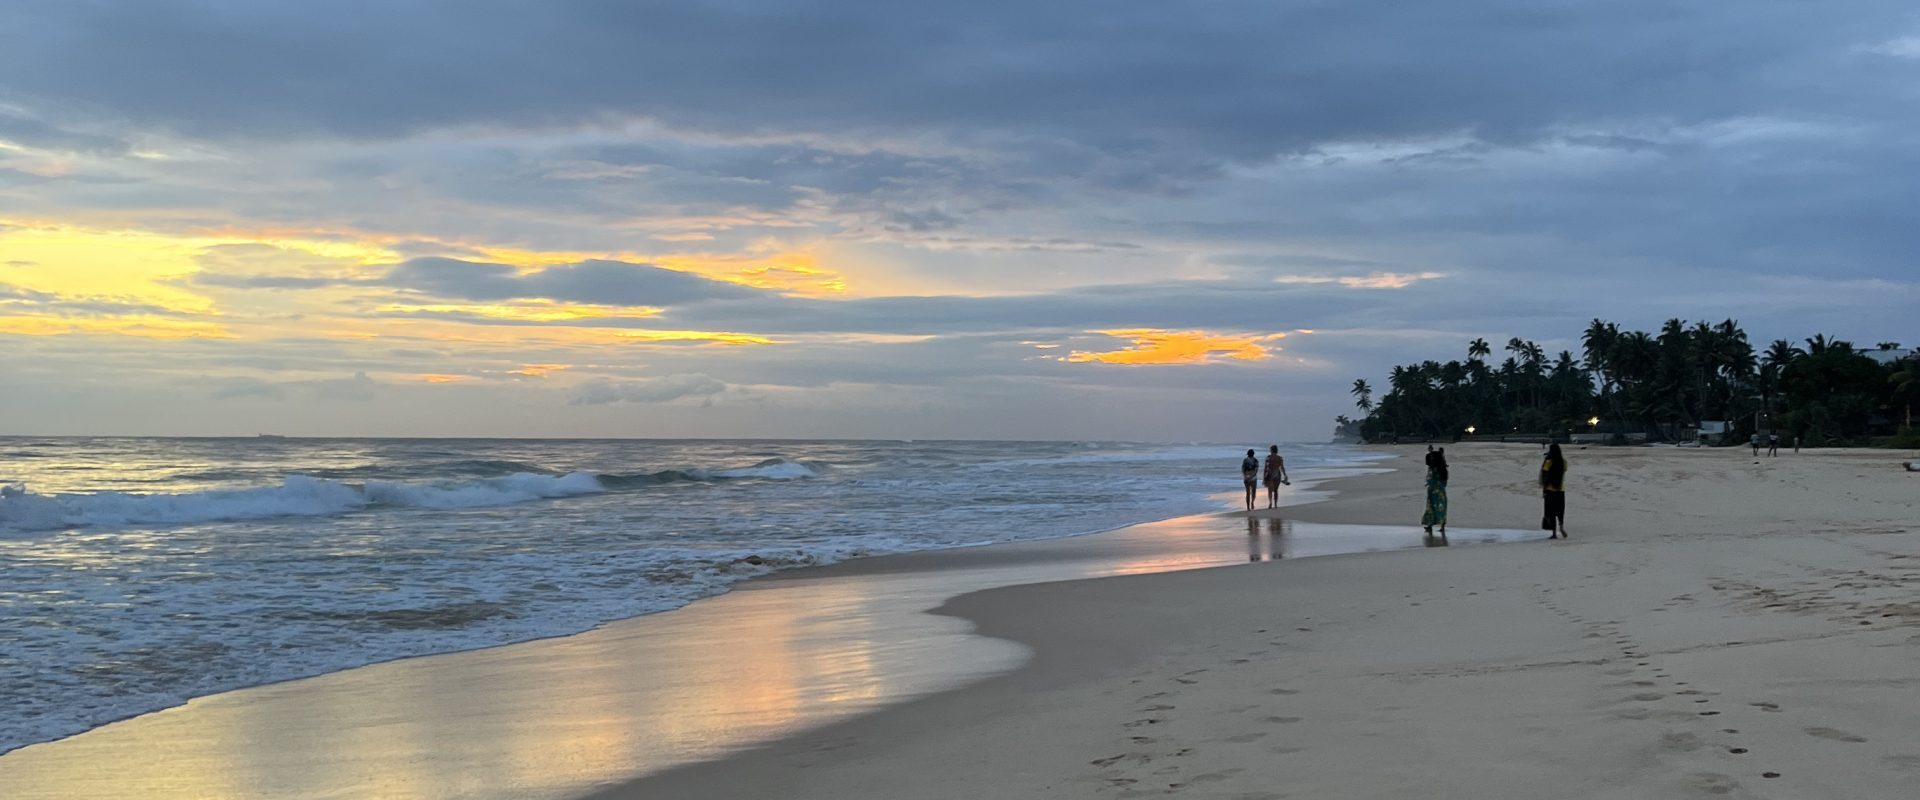 habaraduwa-land-beach-view-to-the-right-srilanka